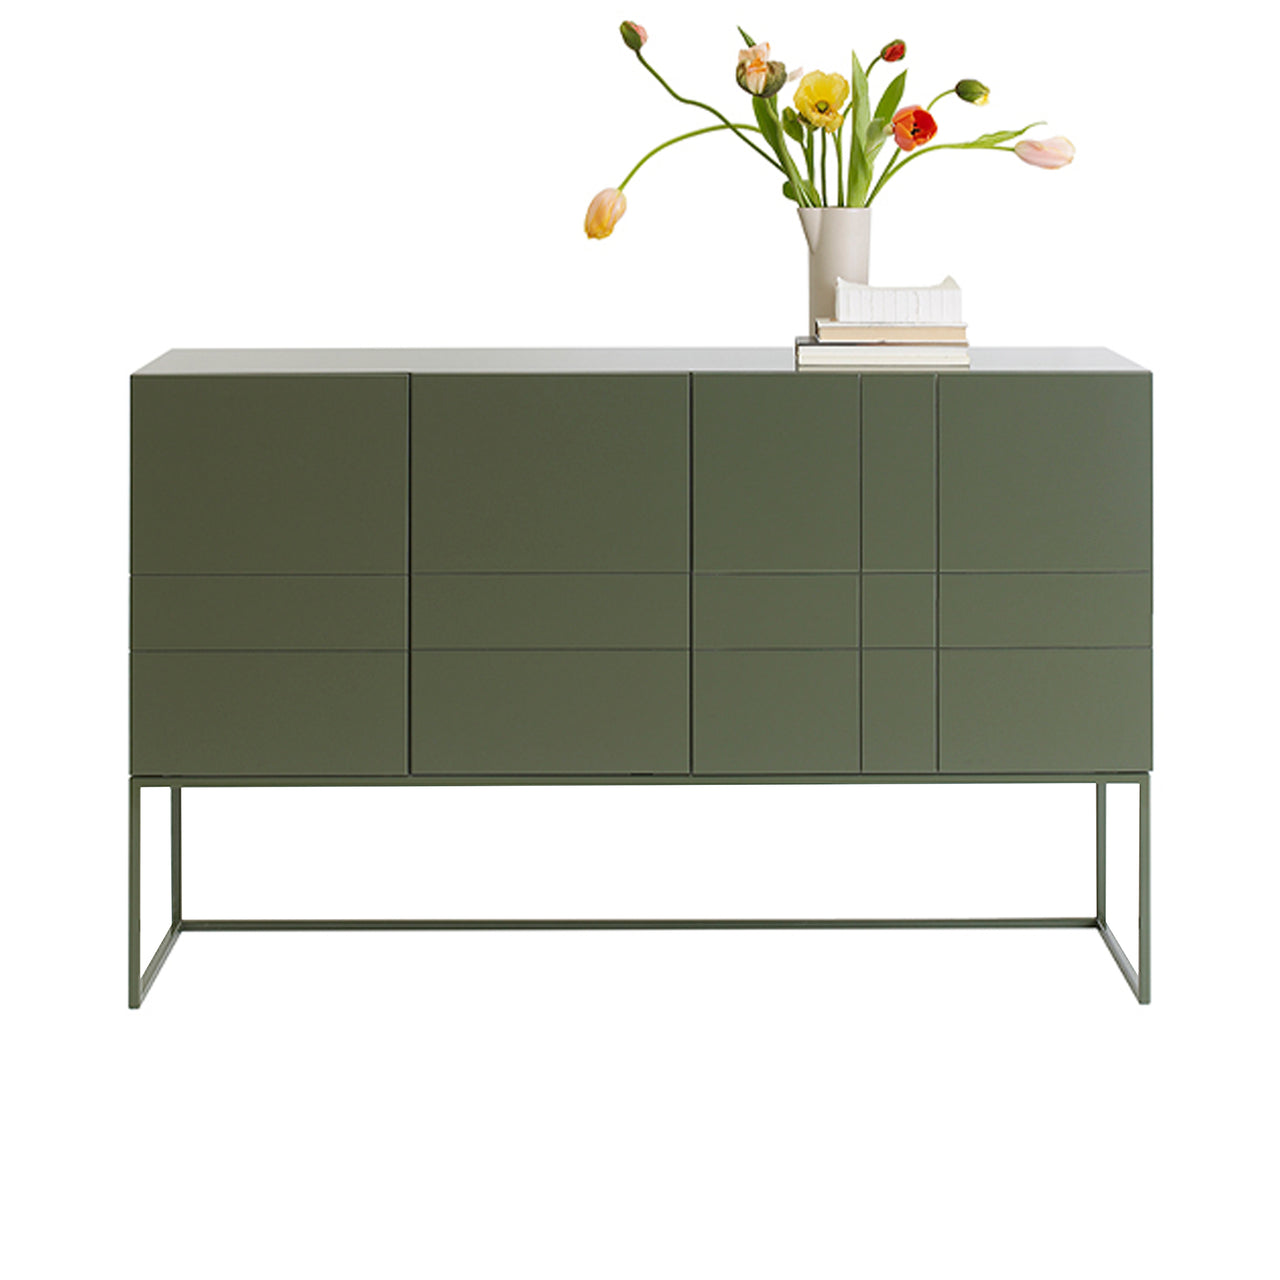 Kilt Light 137 Cabinet with Drawers: Green Khaki